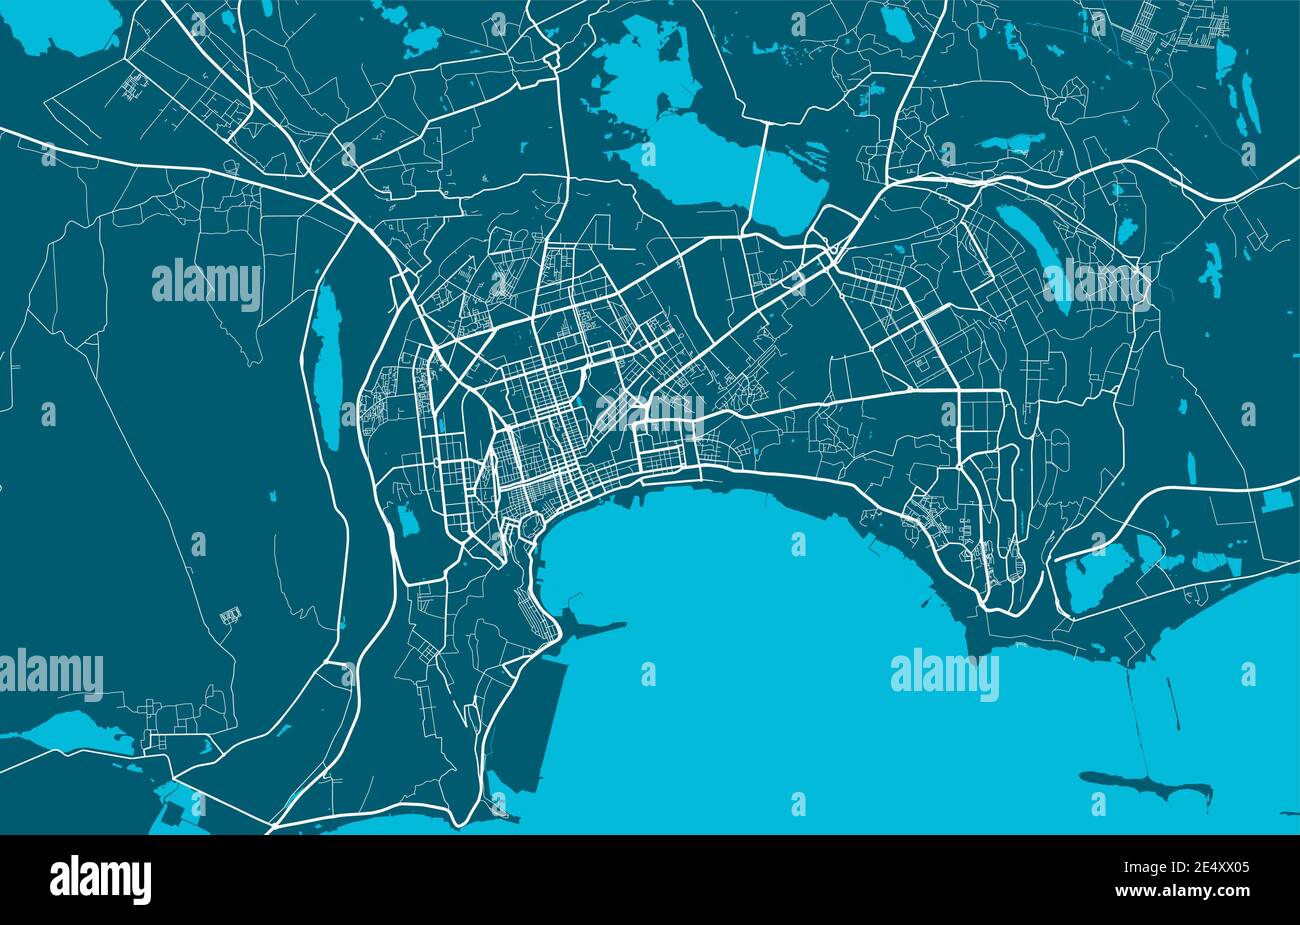 Detailed Map Of Baku City Administrative Area Royalty Free Vector Illustration Cityscape Panorama Decorative Graphic Tourist Map Of Baku Territory 2E4XX05 